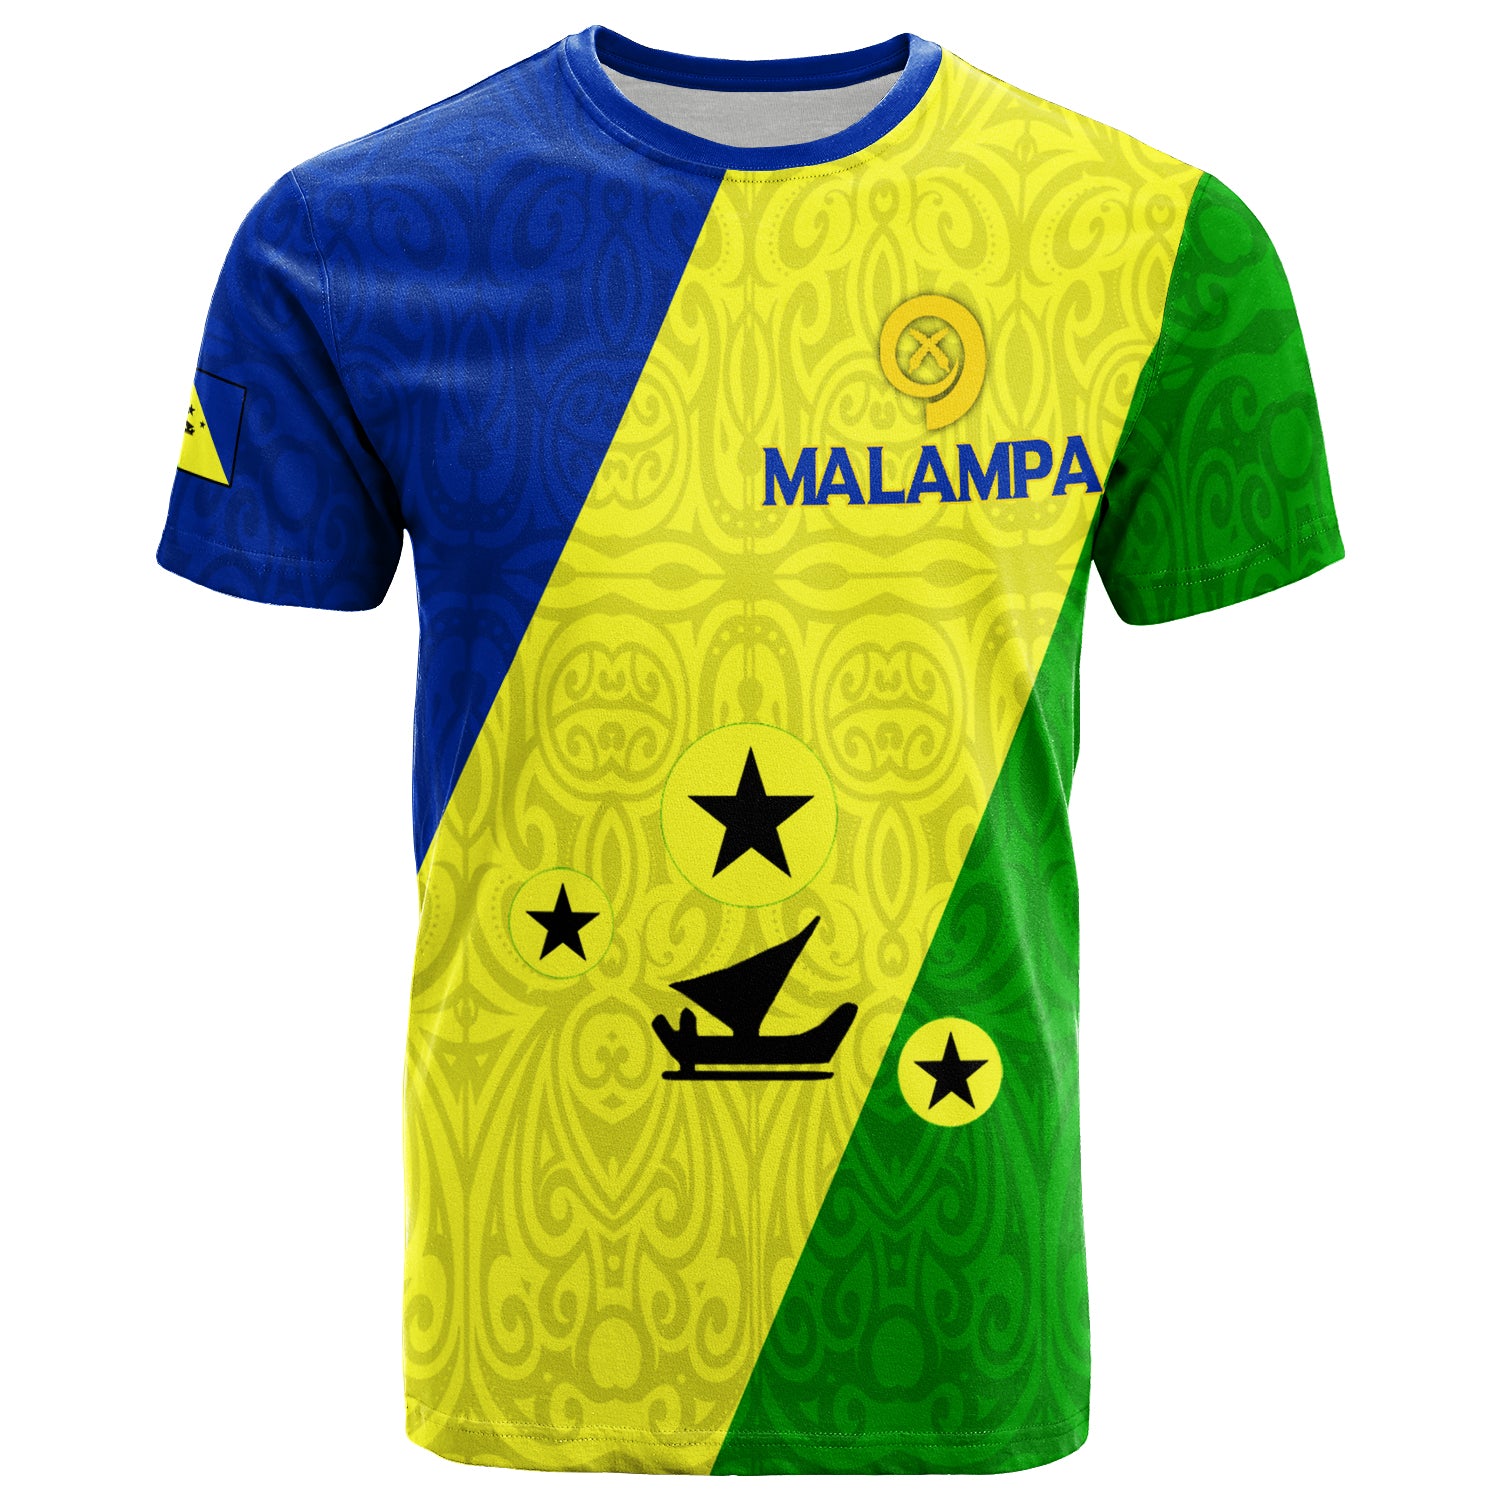 Vanuatu Malampa Province T-Shirt - Flag Style